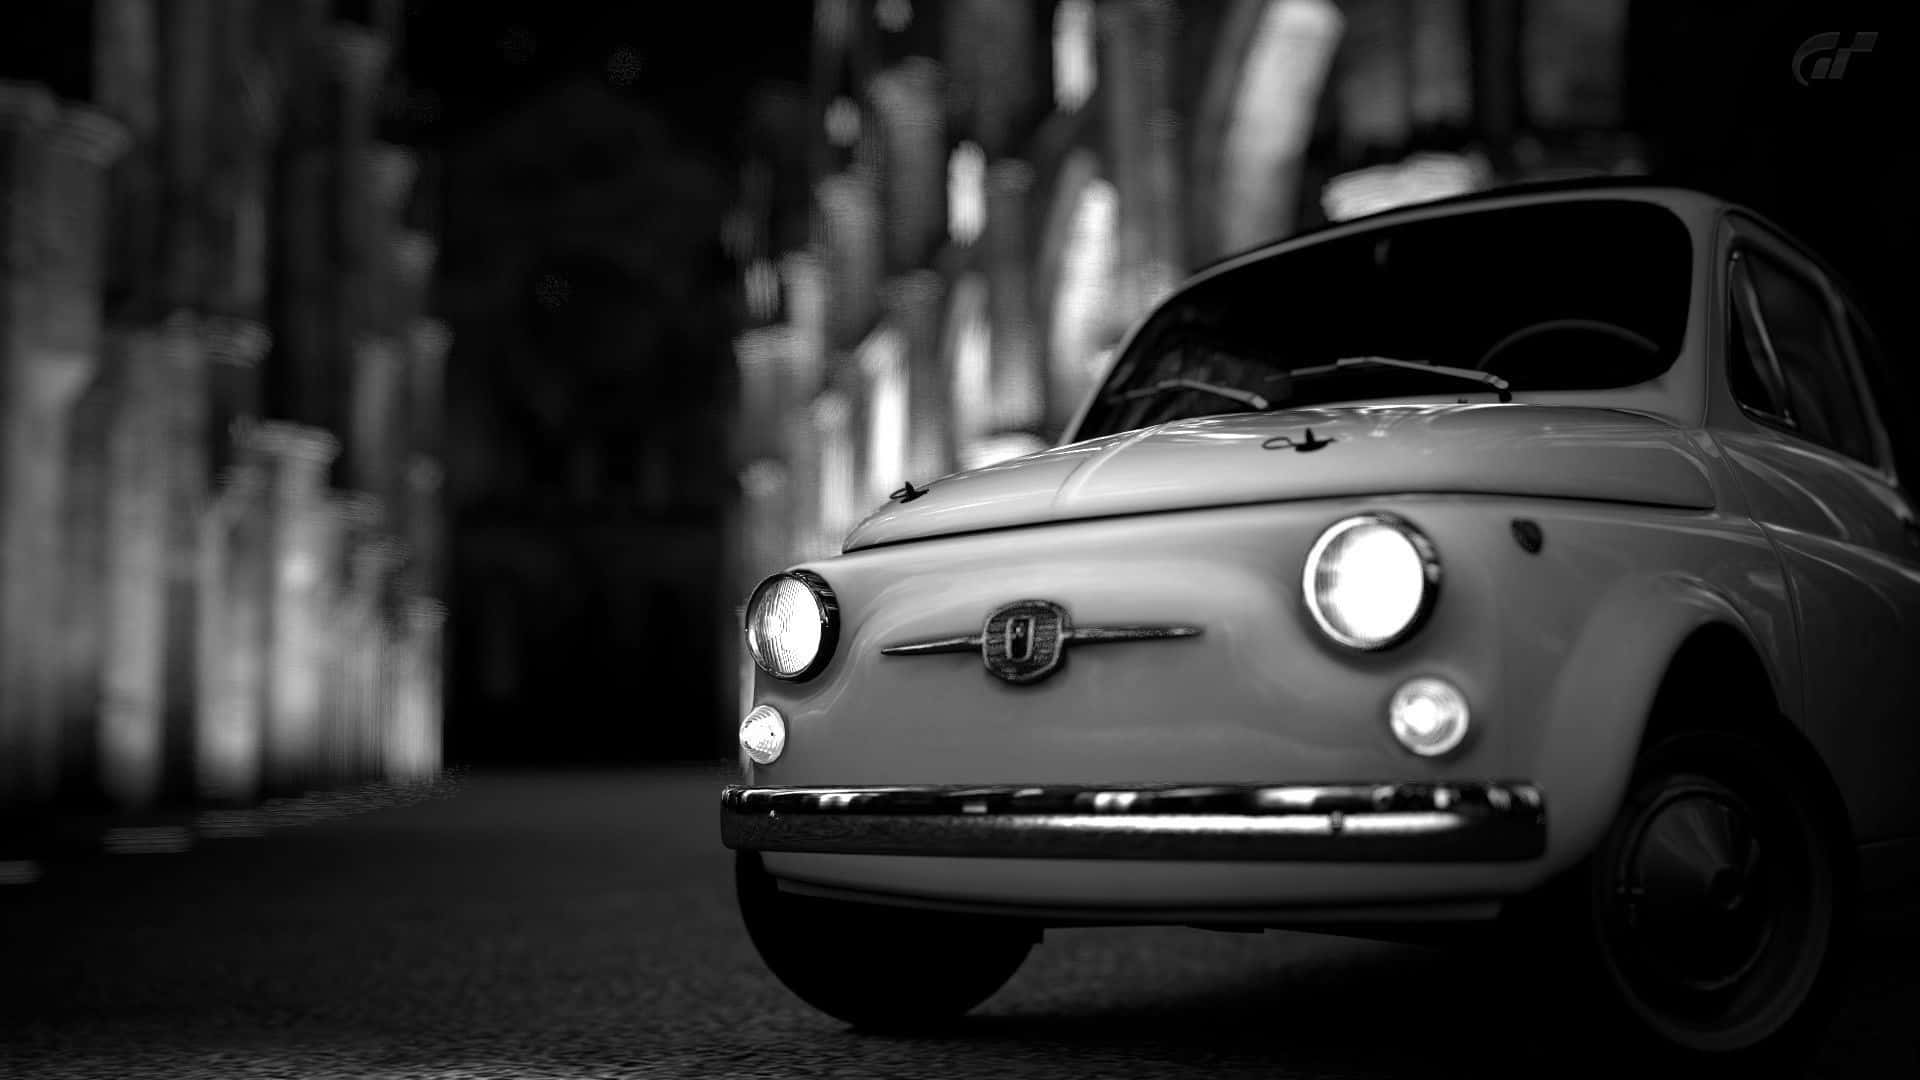 Sleek Fiat Cinquecento In Urban Backdrop Wallpaper